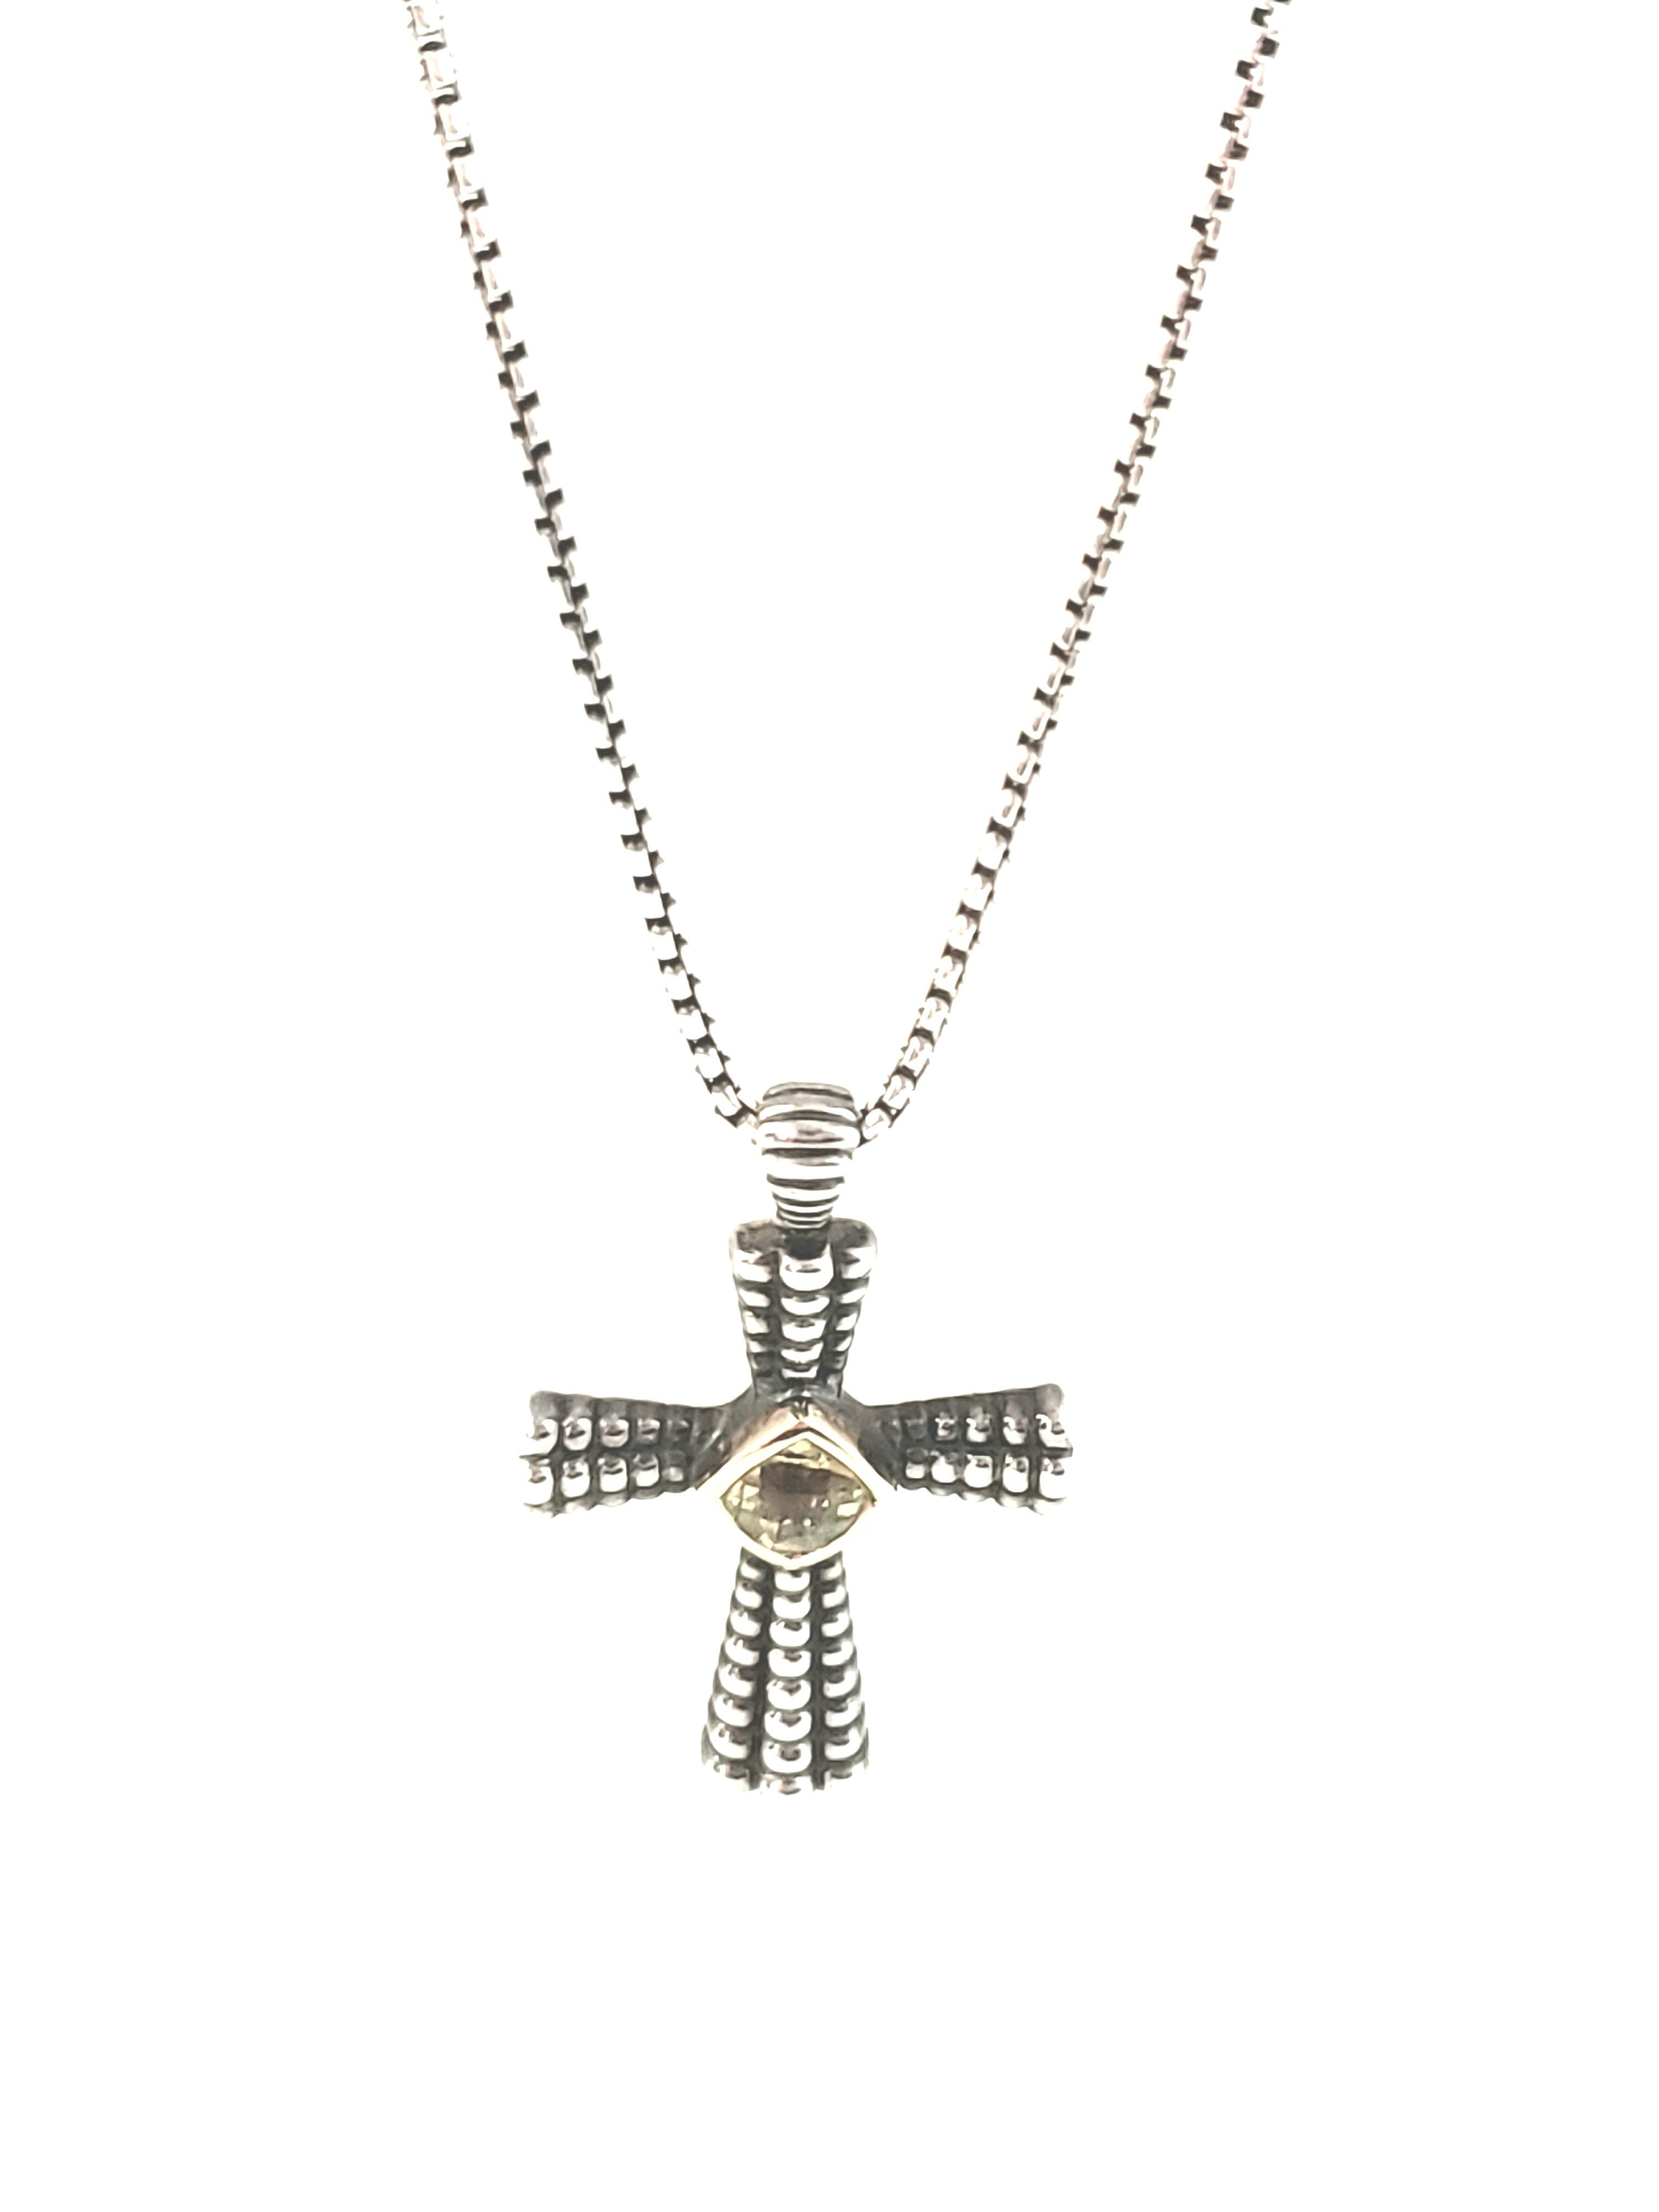 Uncut Sterling Silver 14K Citrine Oxidized Cross Pendant Necklace For Sale